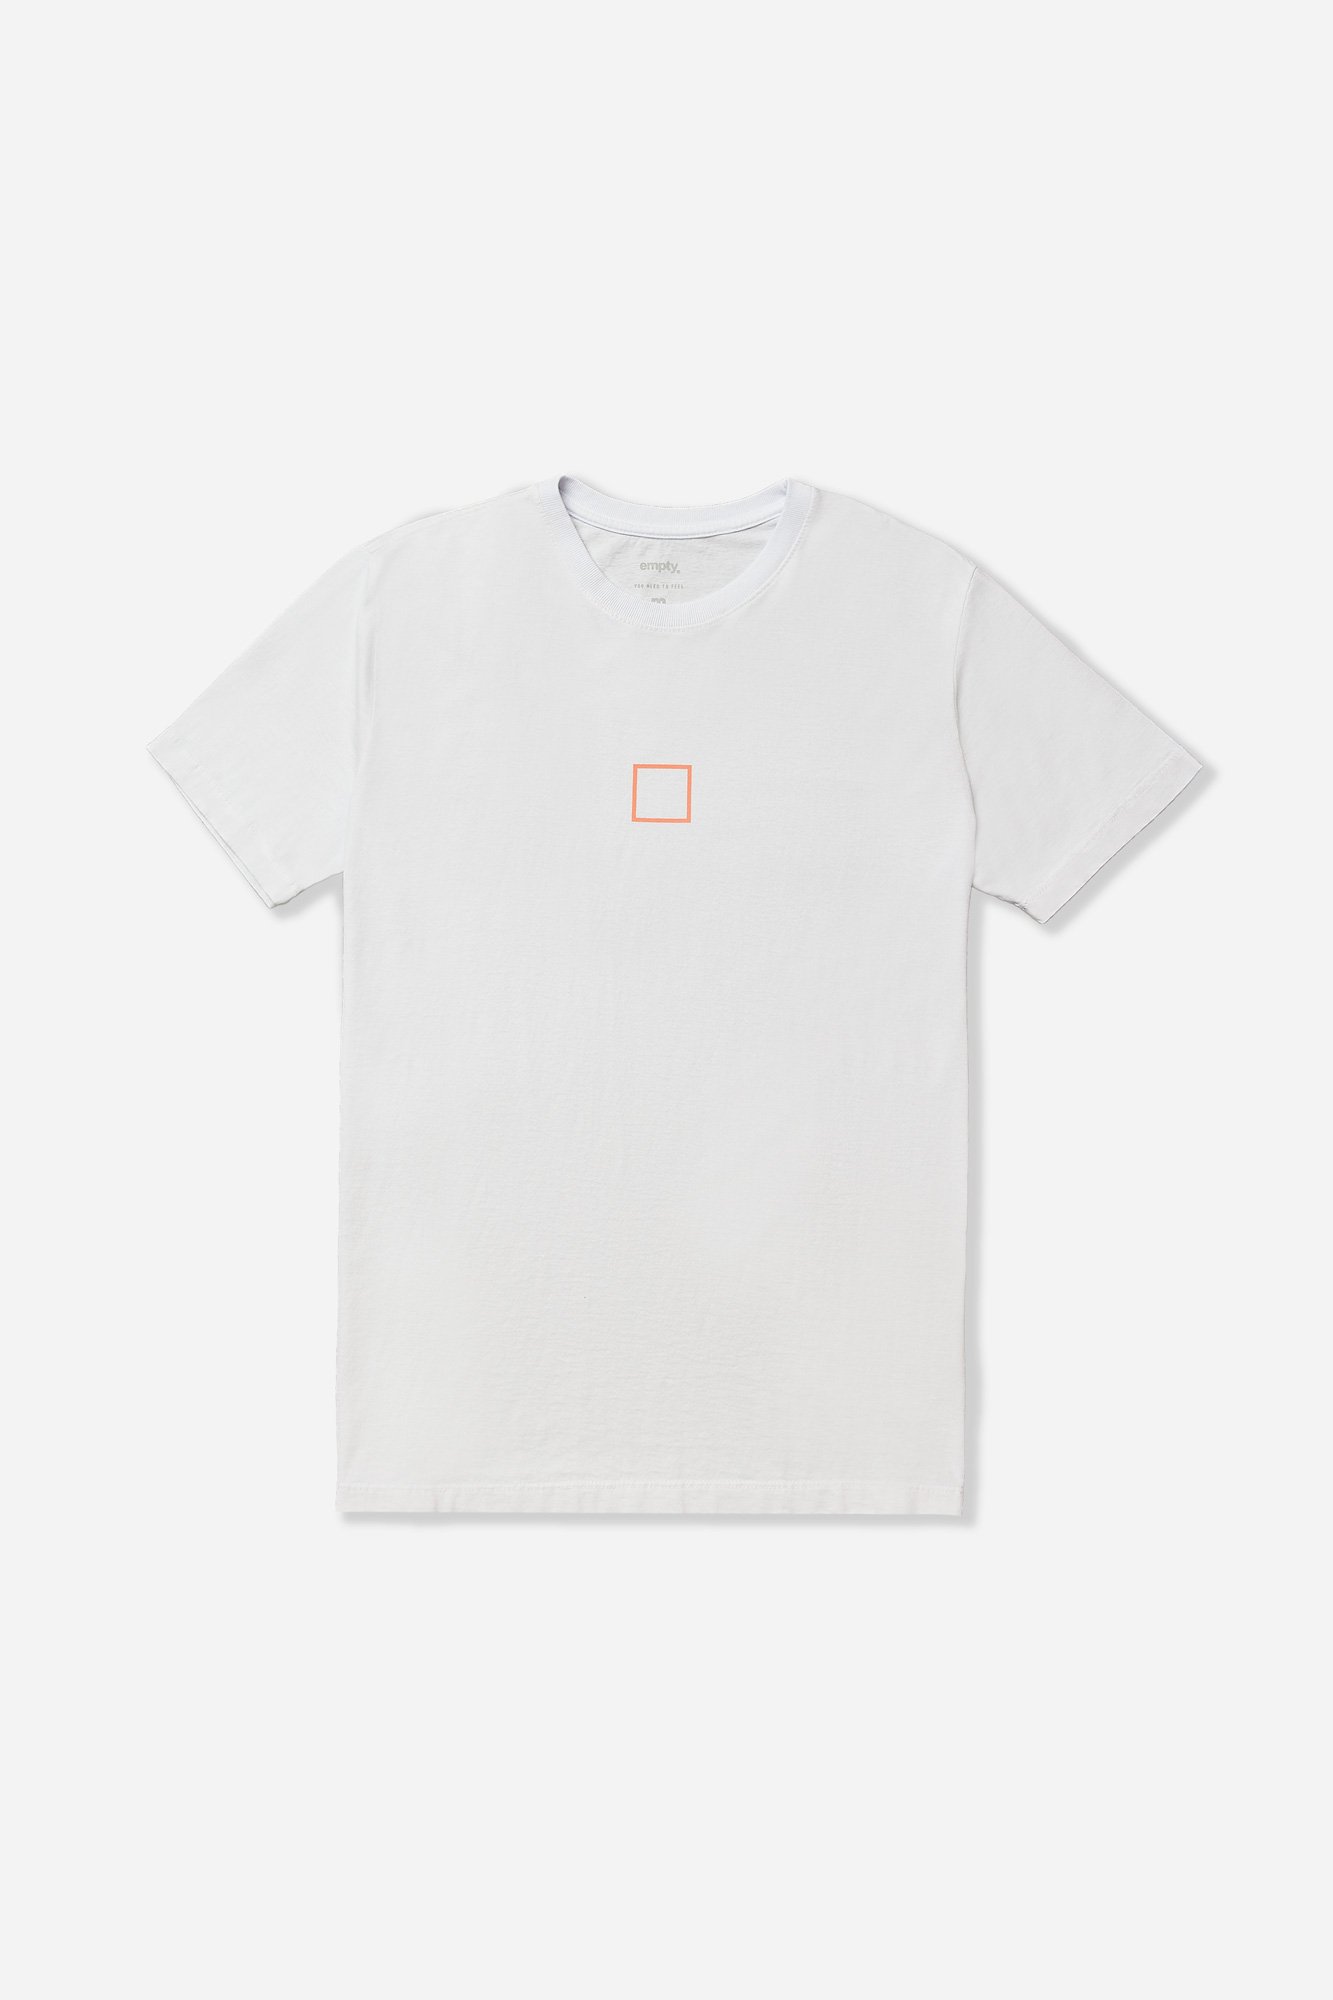 03 camiseta gateway branco